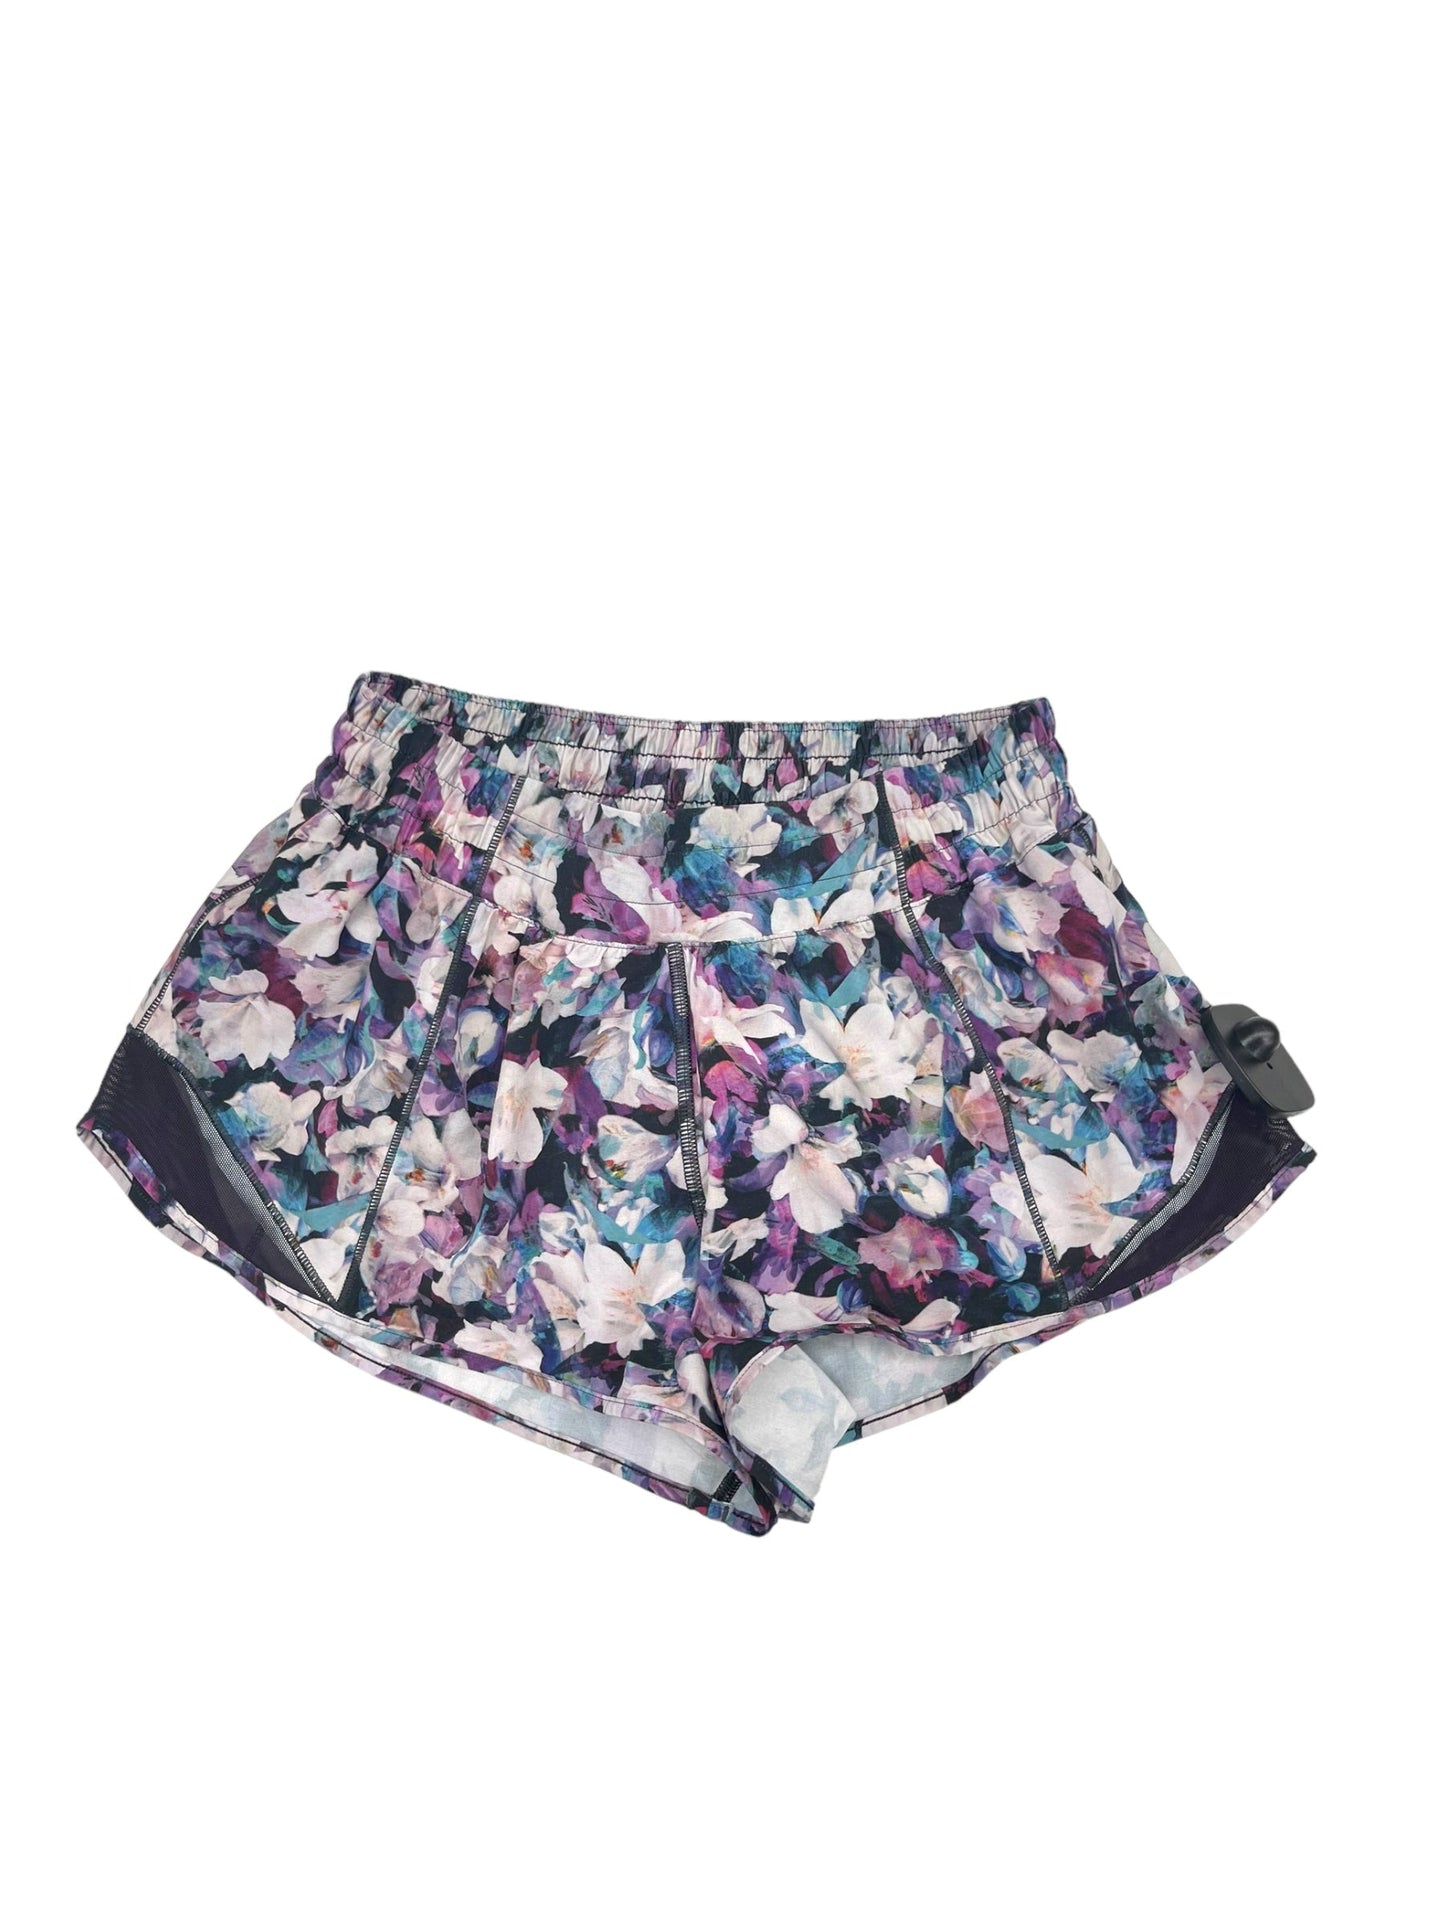 Floral Print Athletic Shorts Lululemon, Size 6